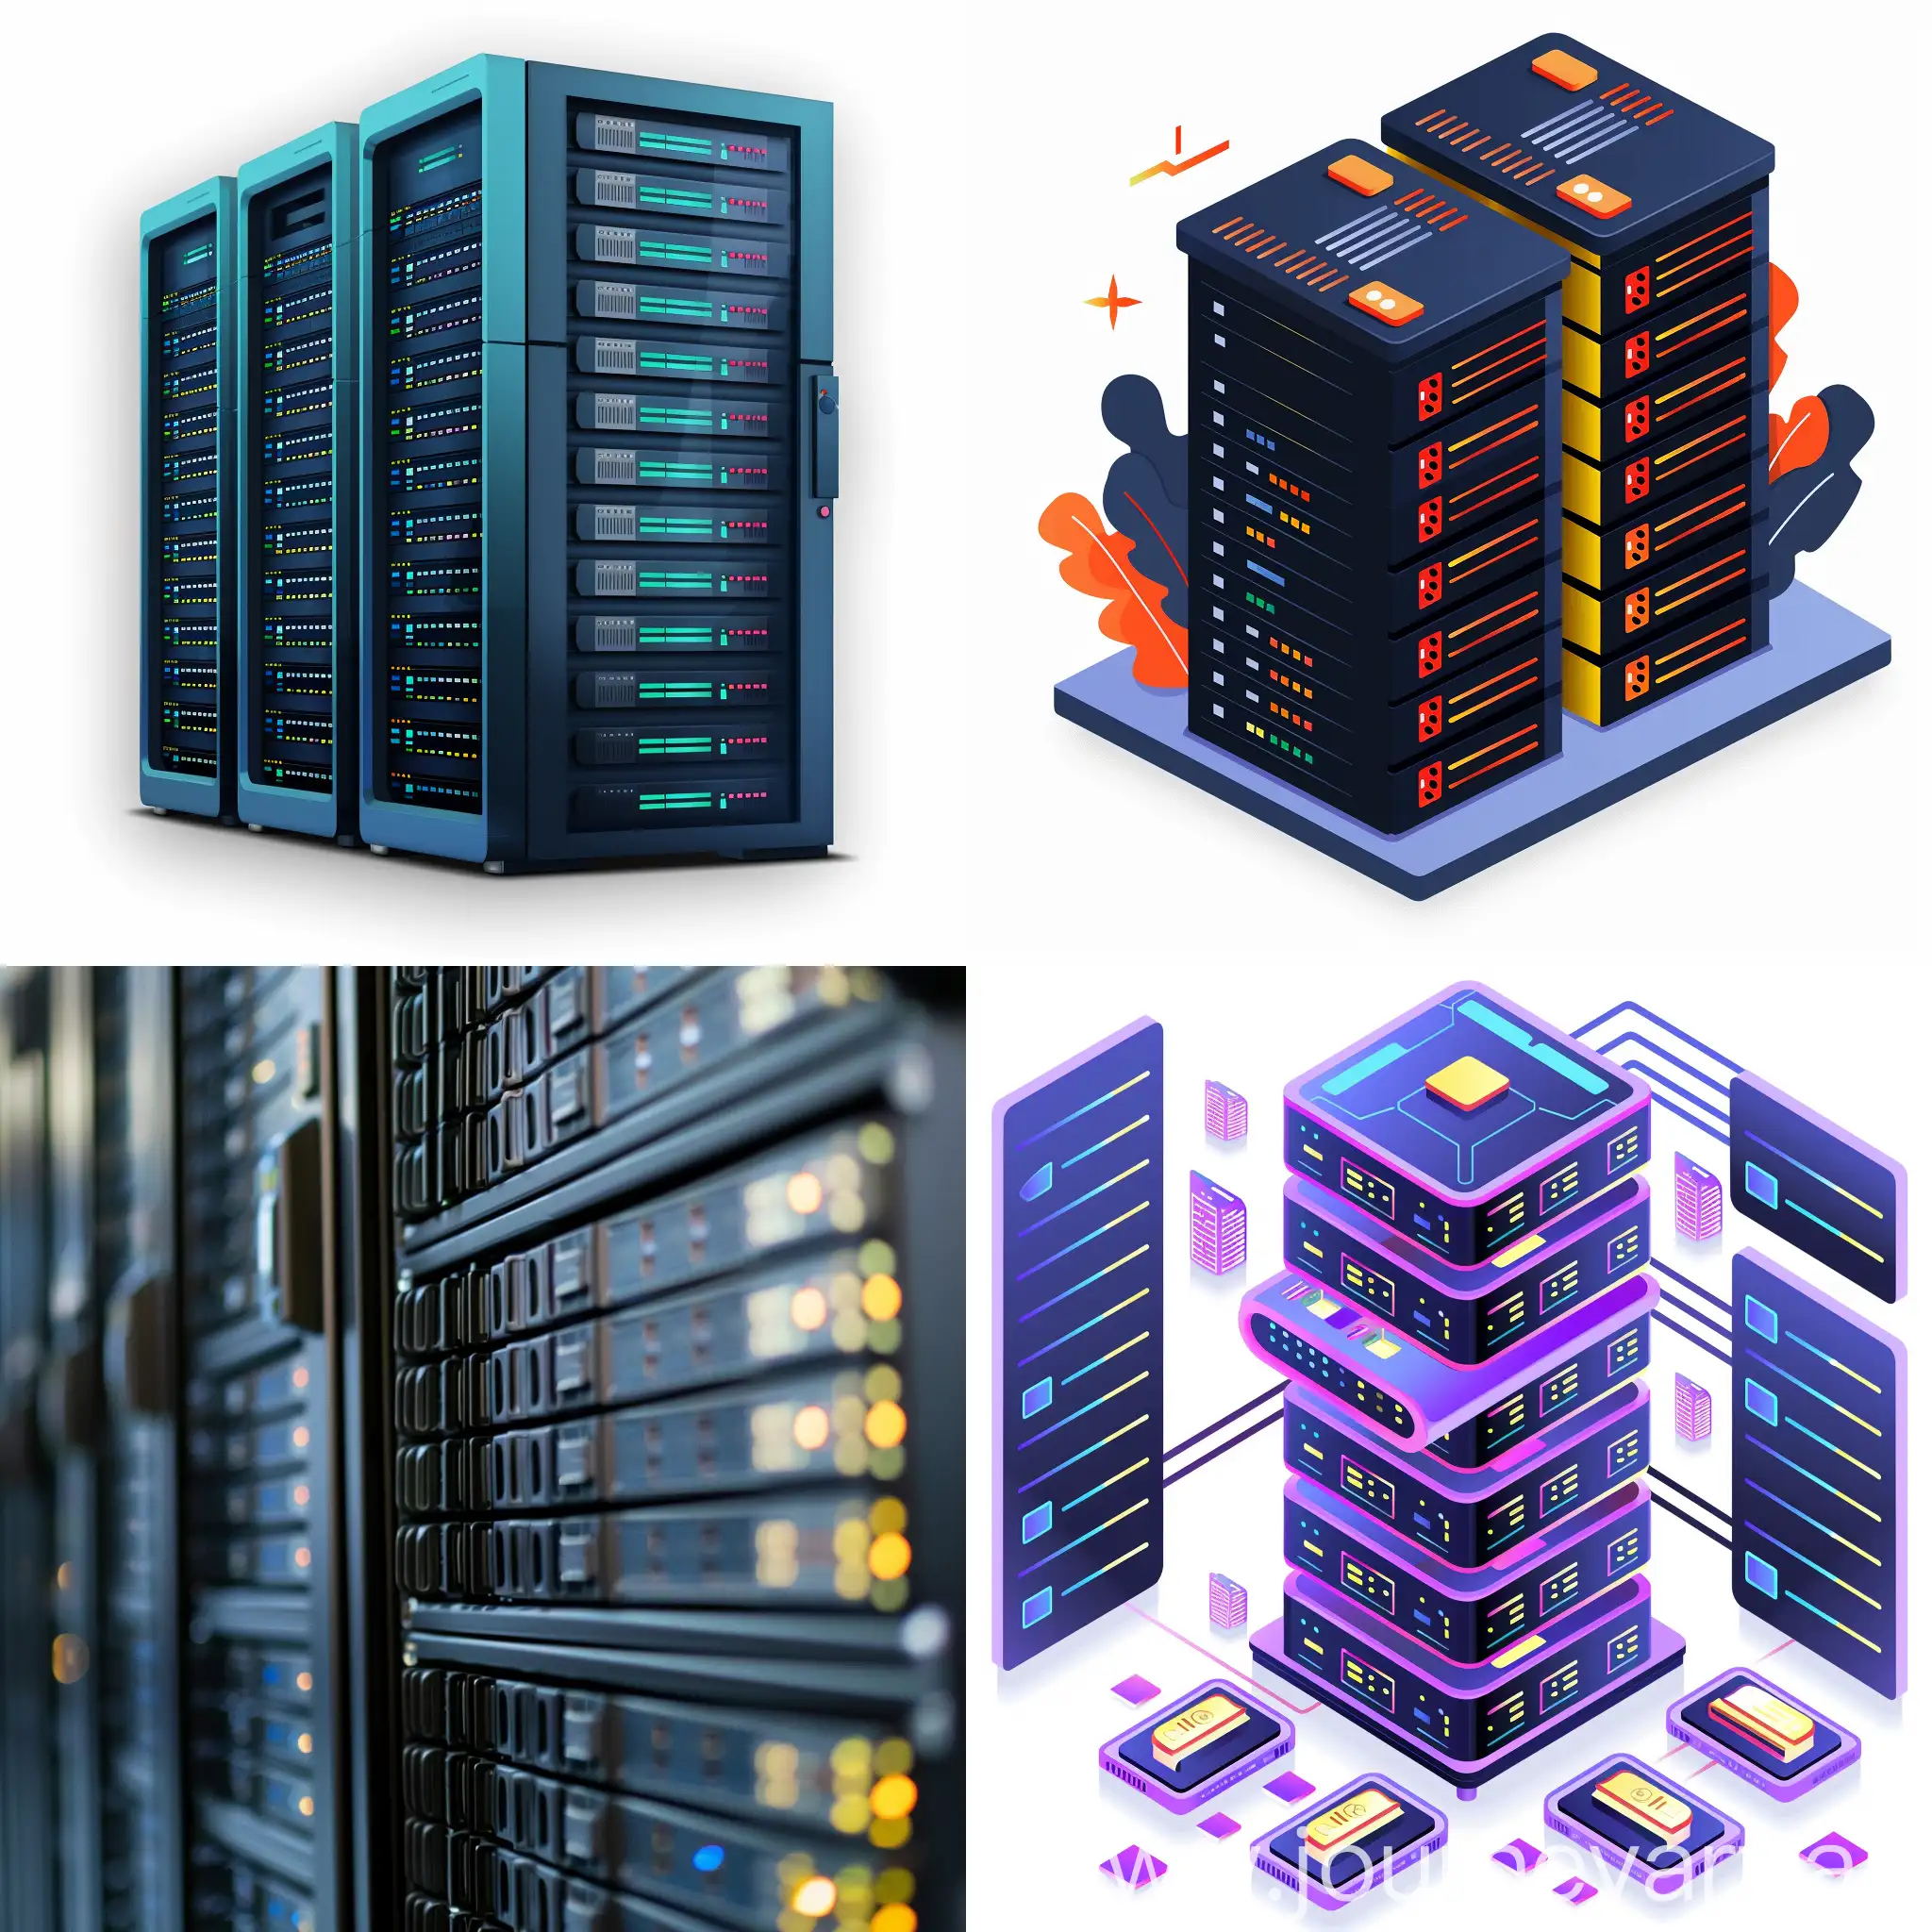 Modern-Web-Hosting-Servers-in-Data-Center-Facility